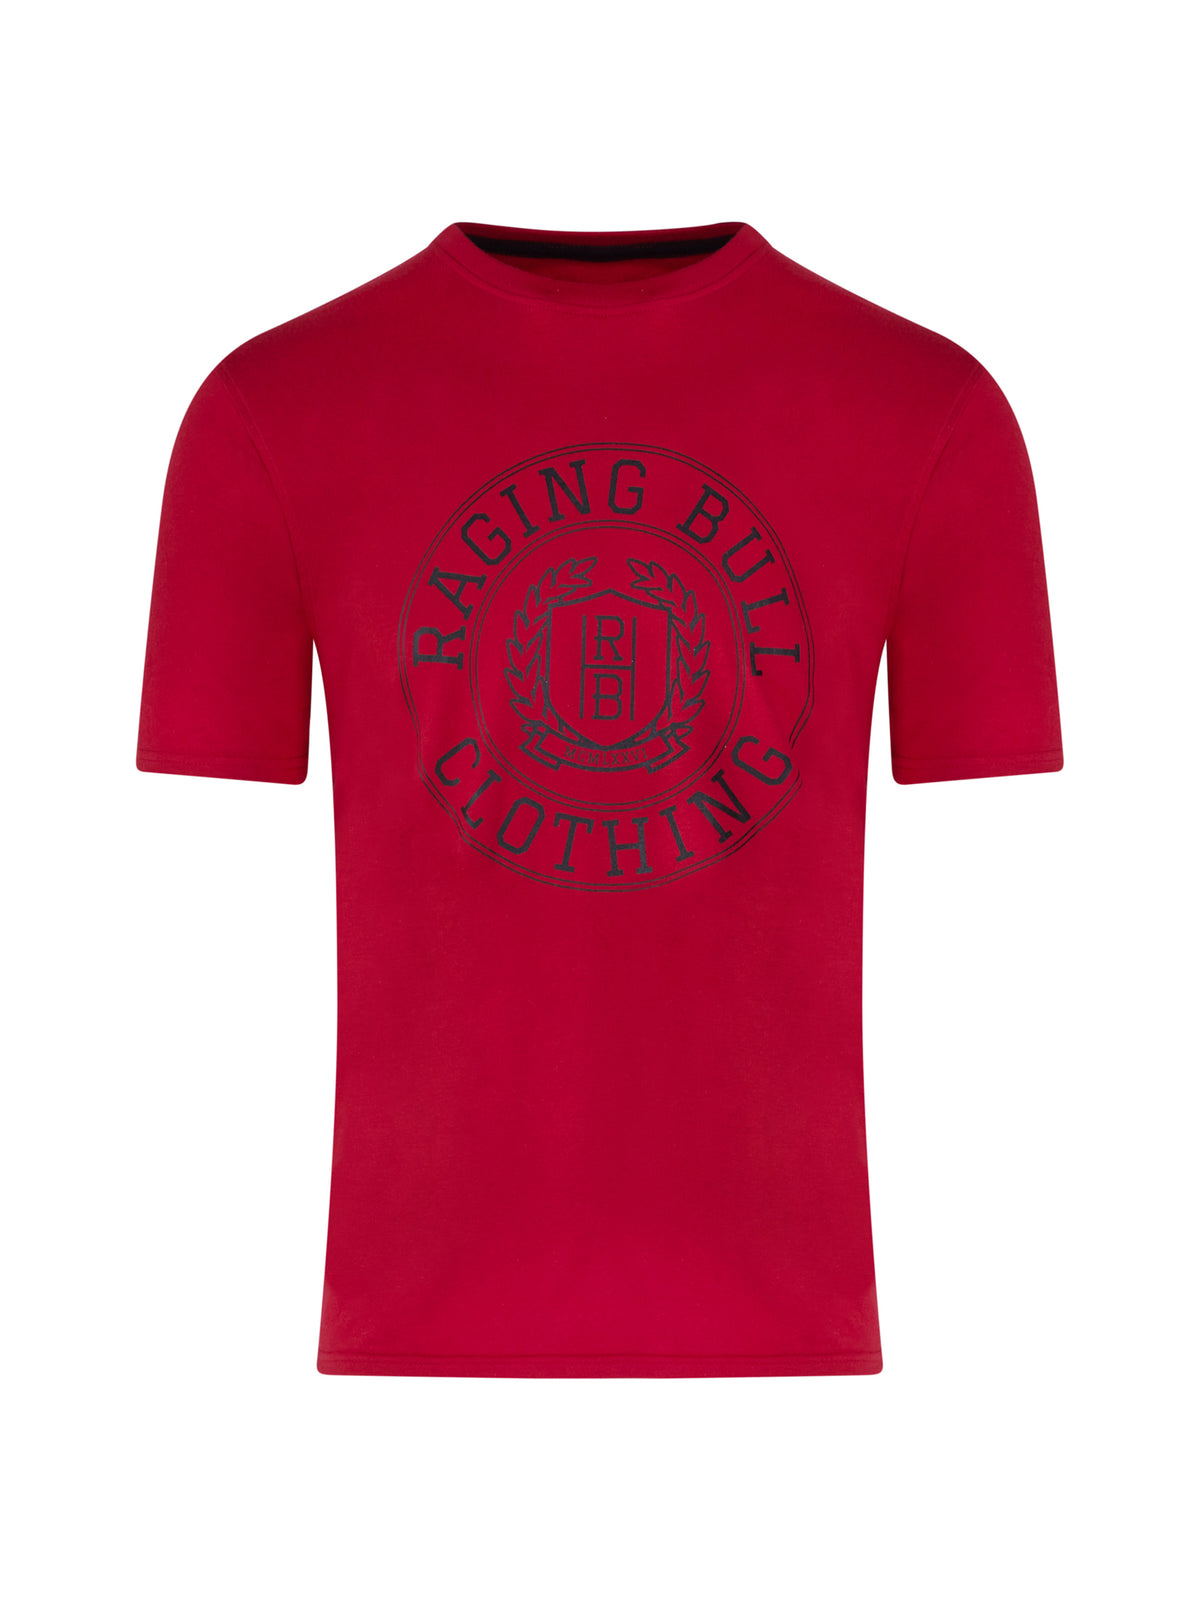 Crest T-Shirt - Red